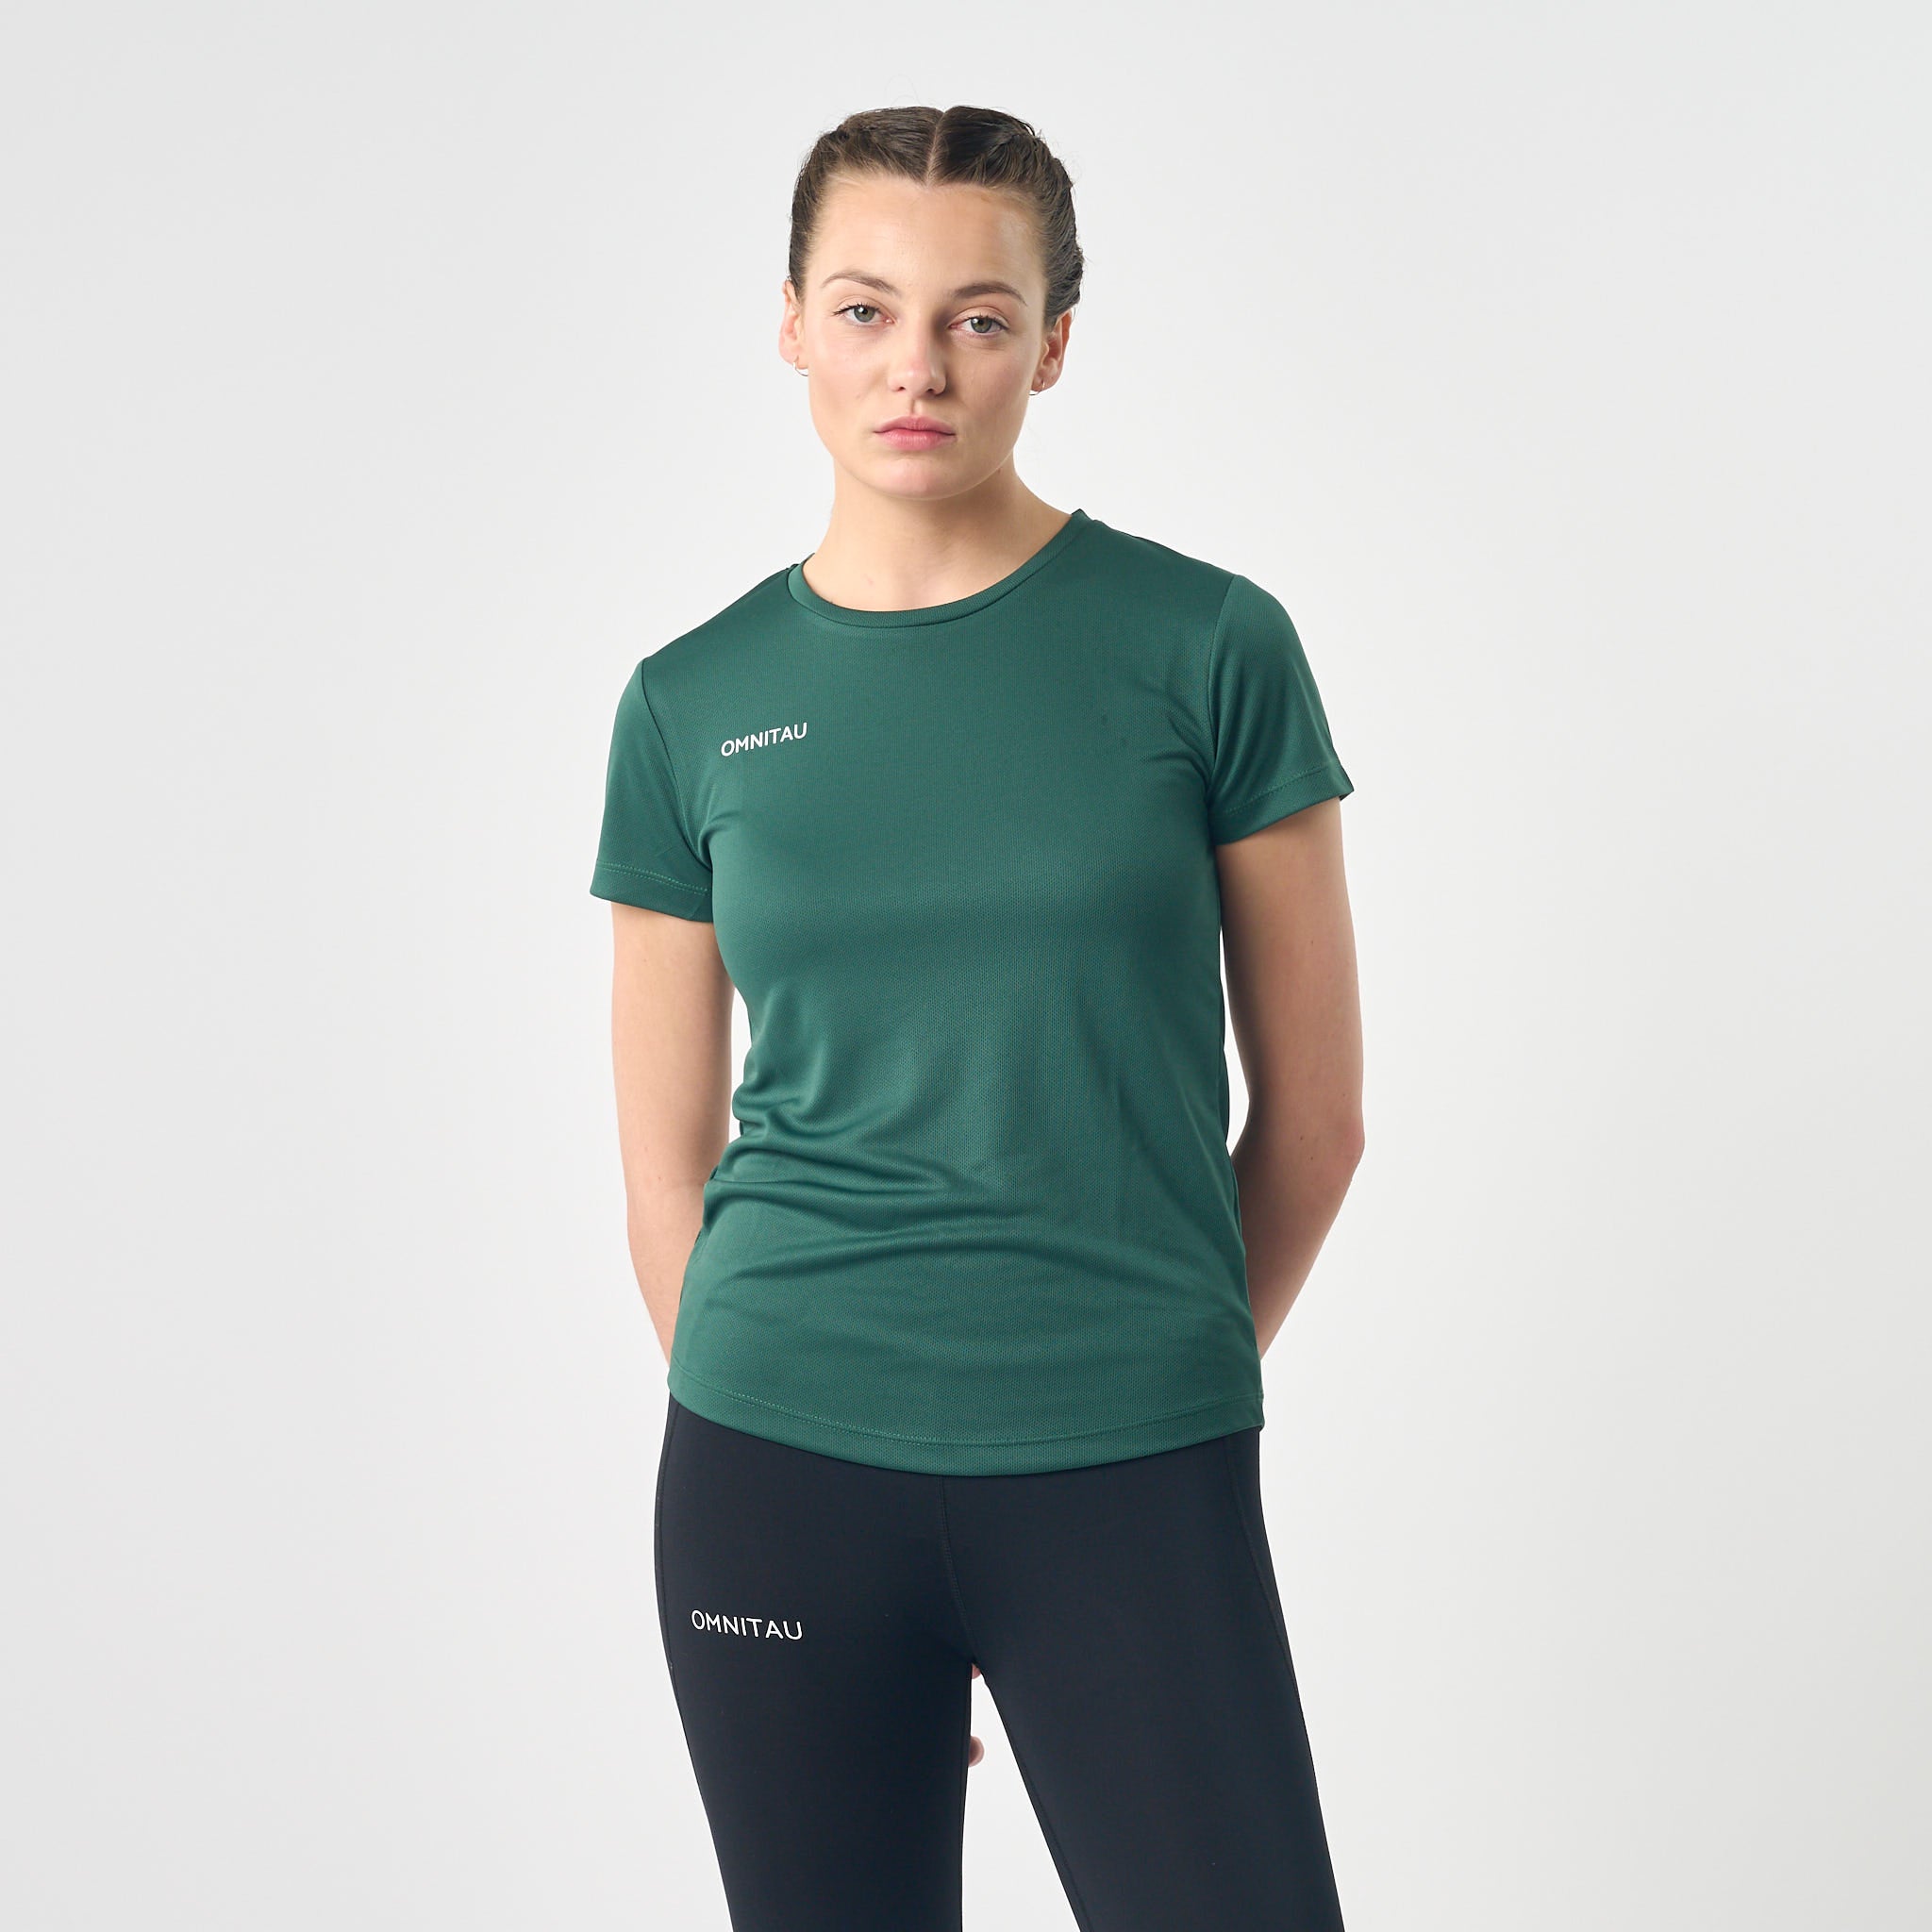 Omnitau Women's Team Sports Core Football Shirt- Bottle Green